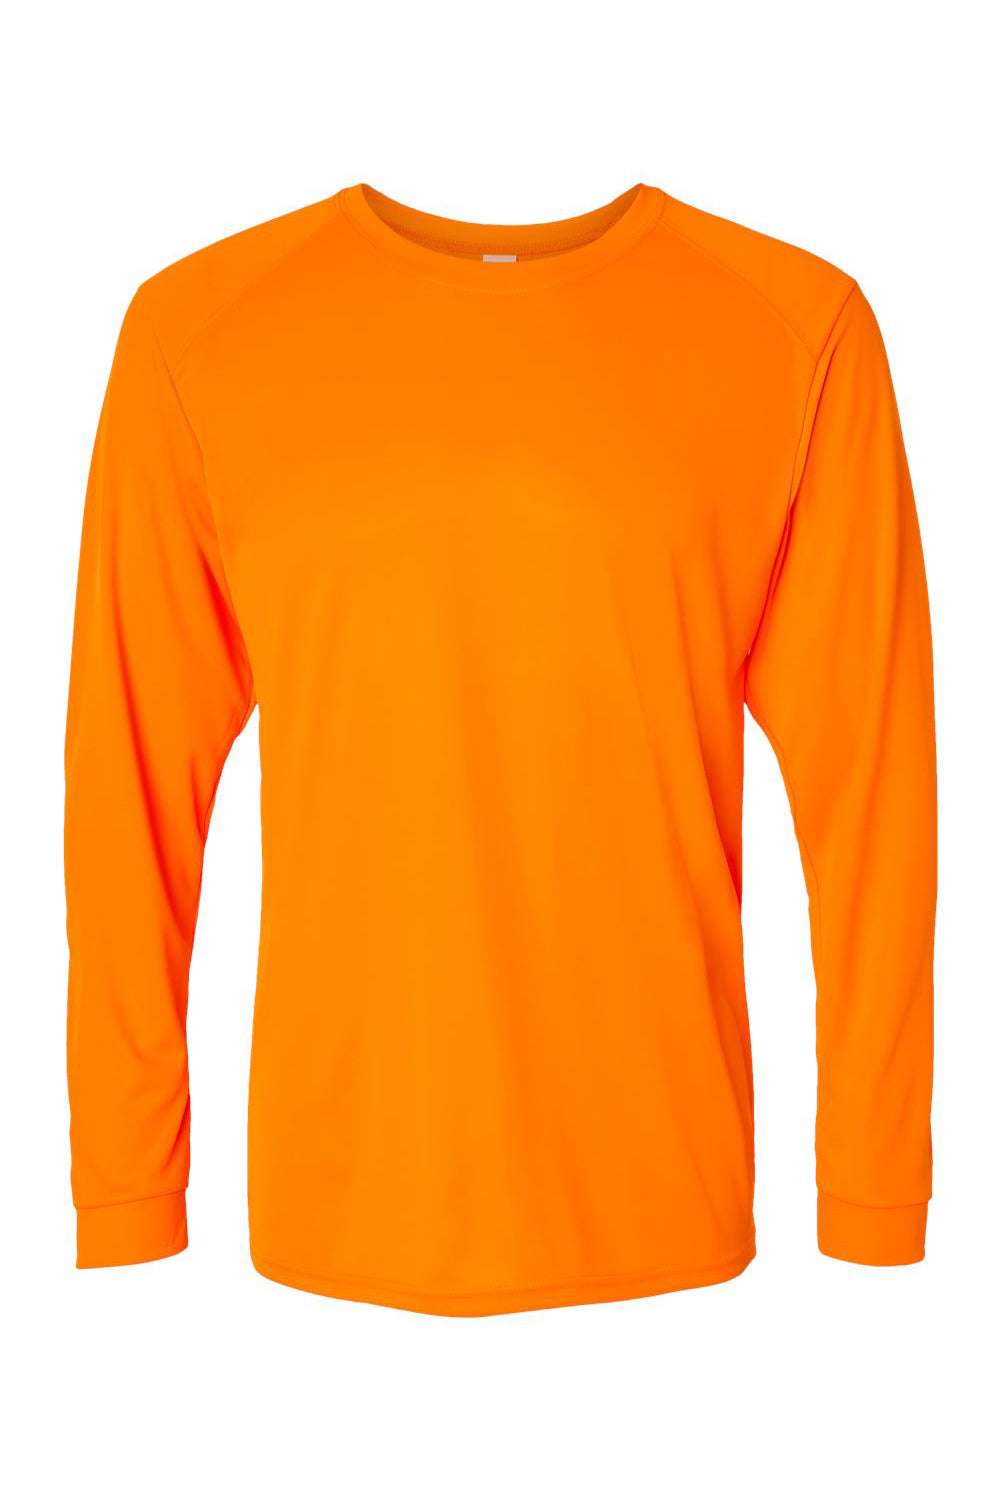 Paragon 210 Mens Islander Performance Long Sleeve Crewneck T-Shirt Neon Orange Flat Front